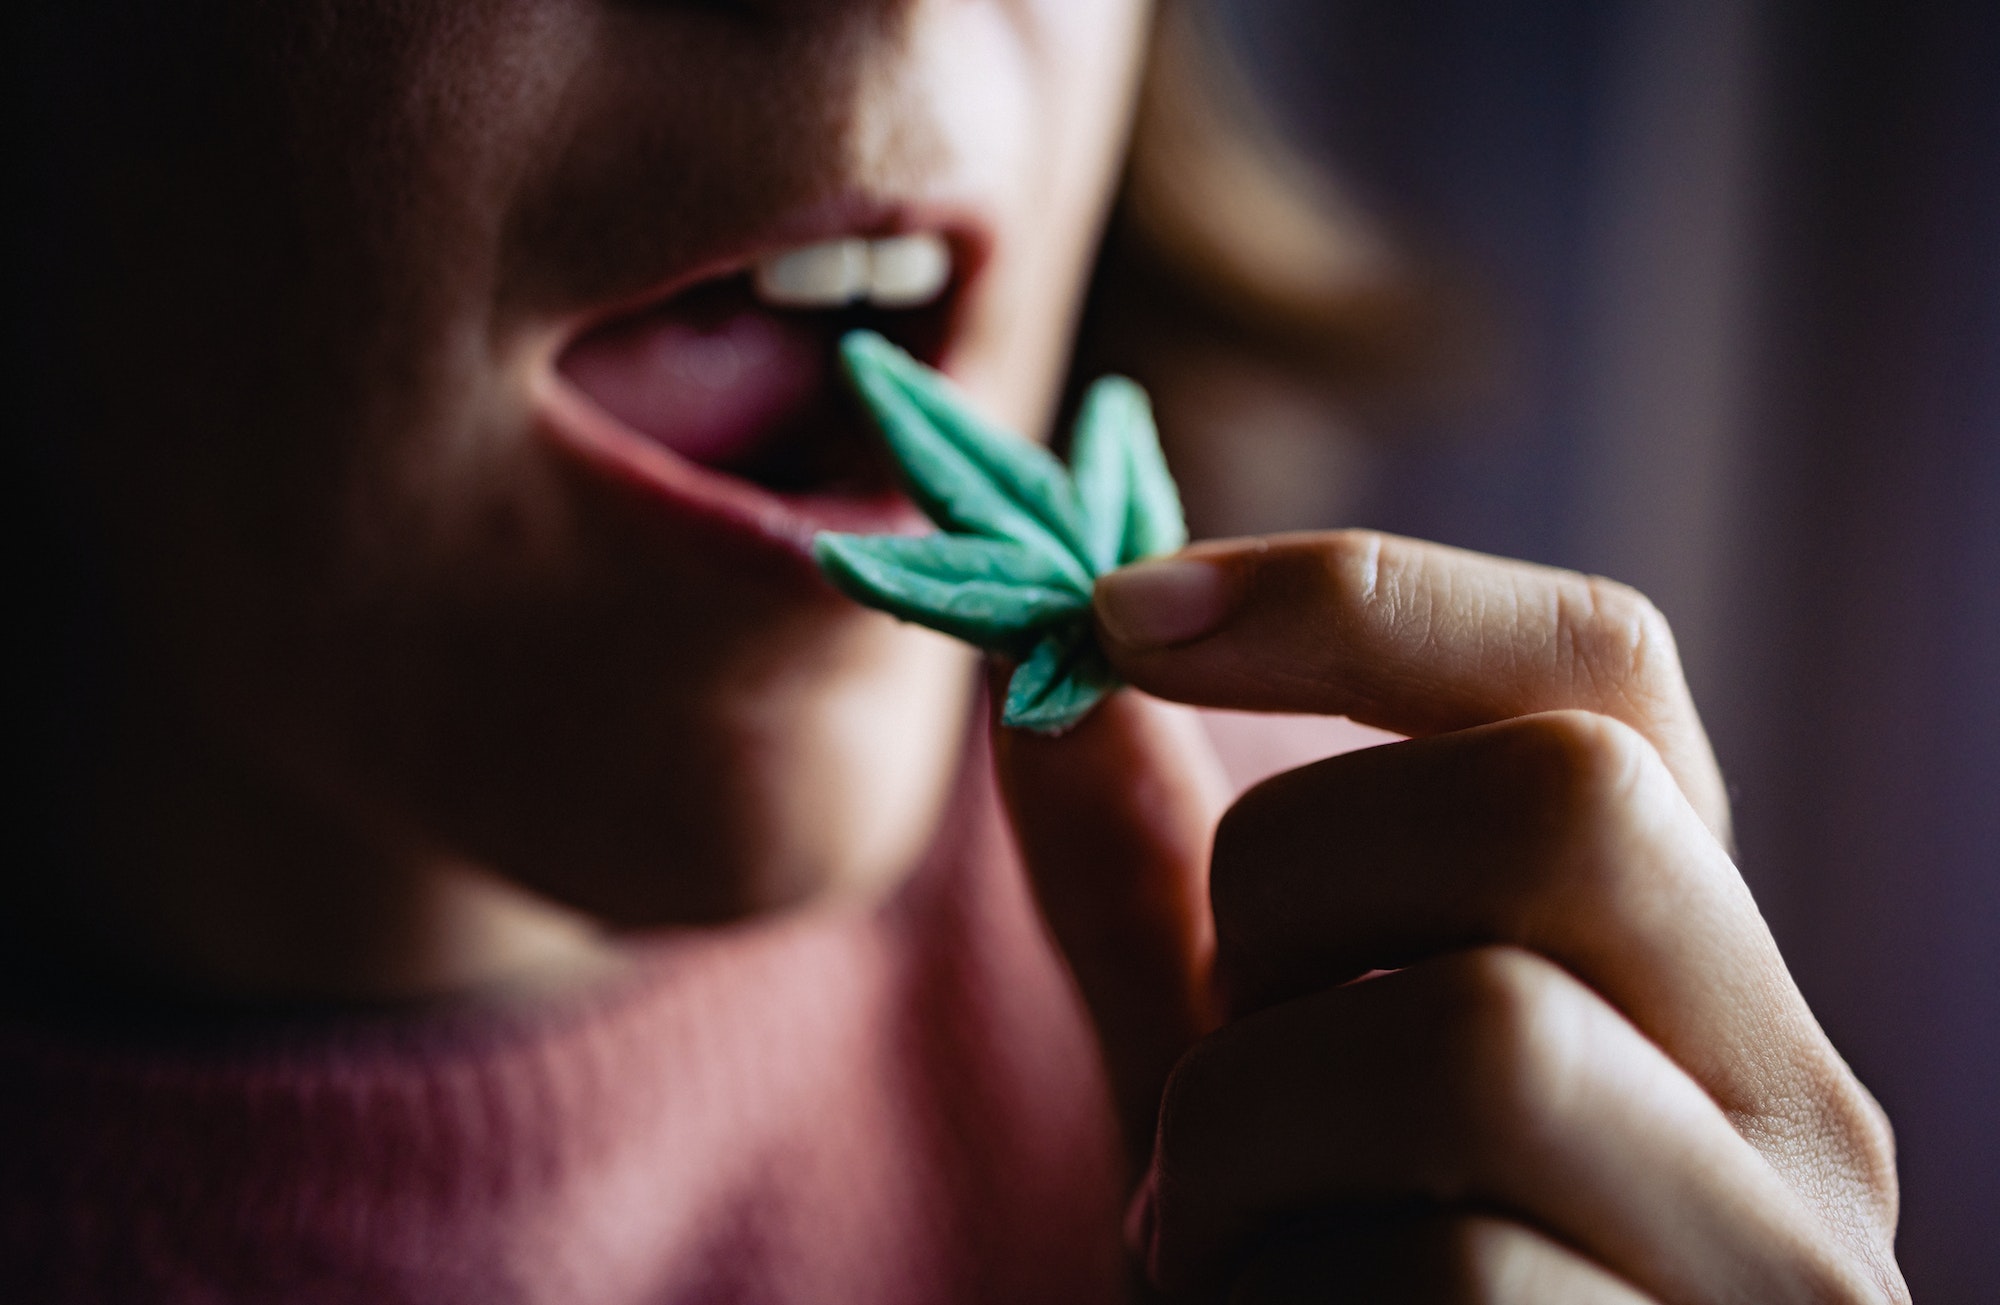 Cbd candy - Woman eating edible cannabis leaf for anxiety treatment - Marijuana alternative medicine